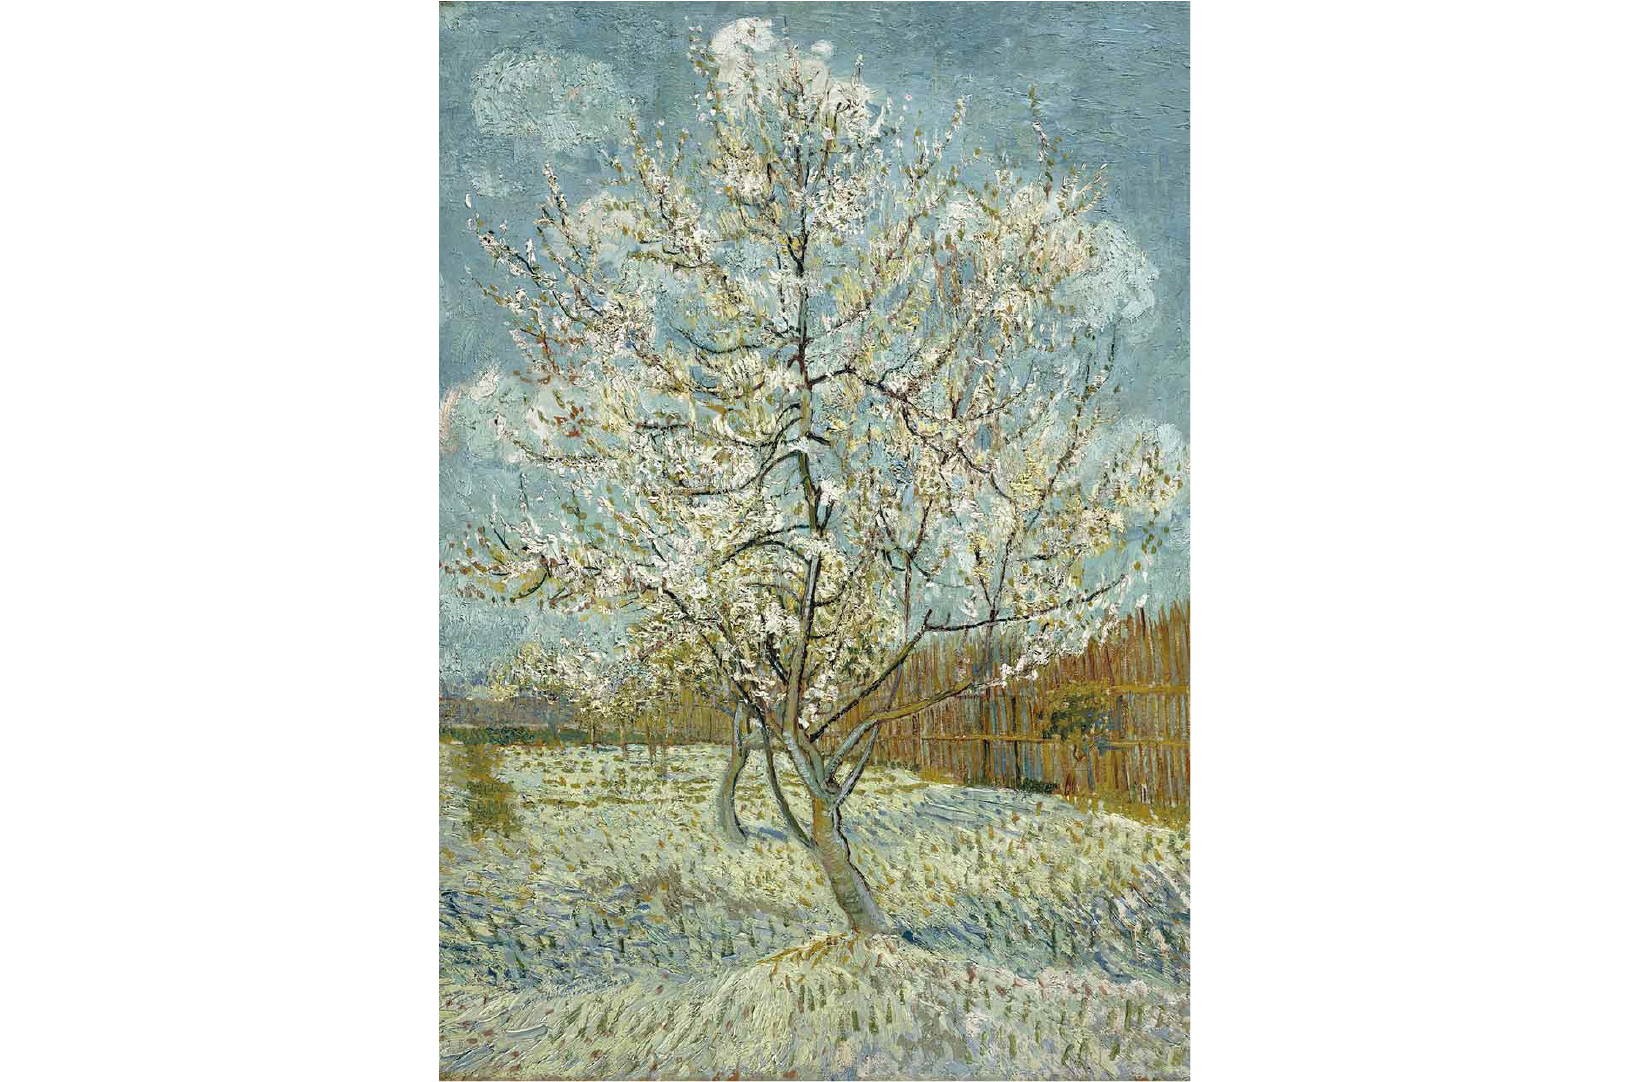 The Pink Peach Tree by Van Gogh